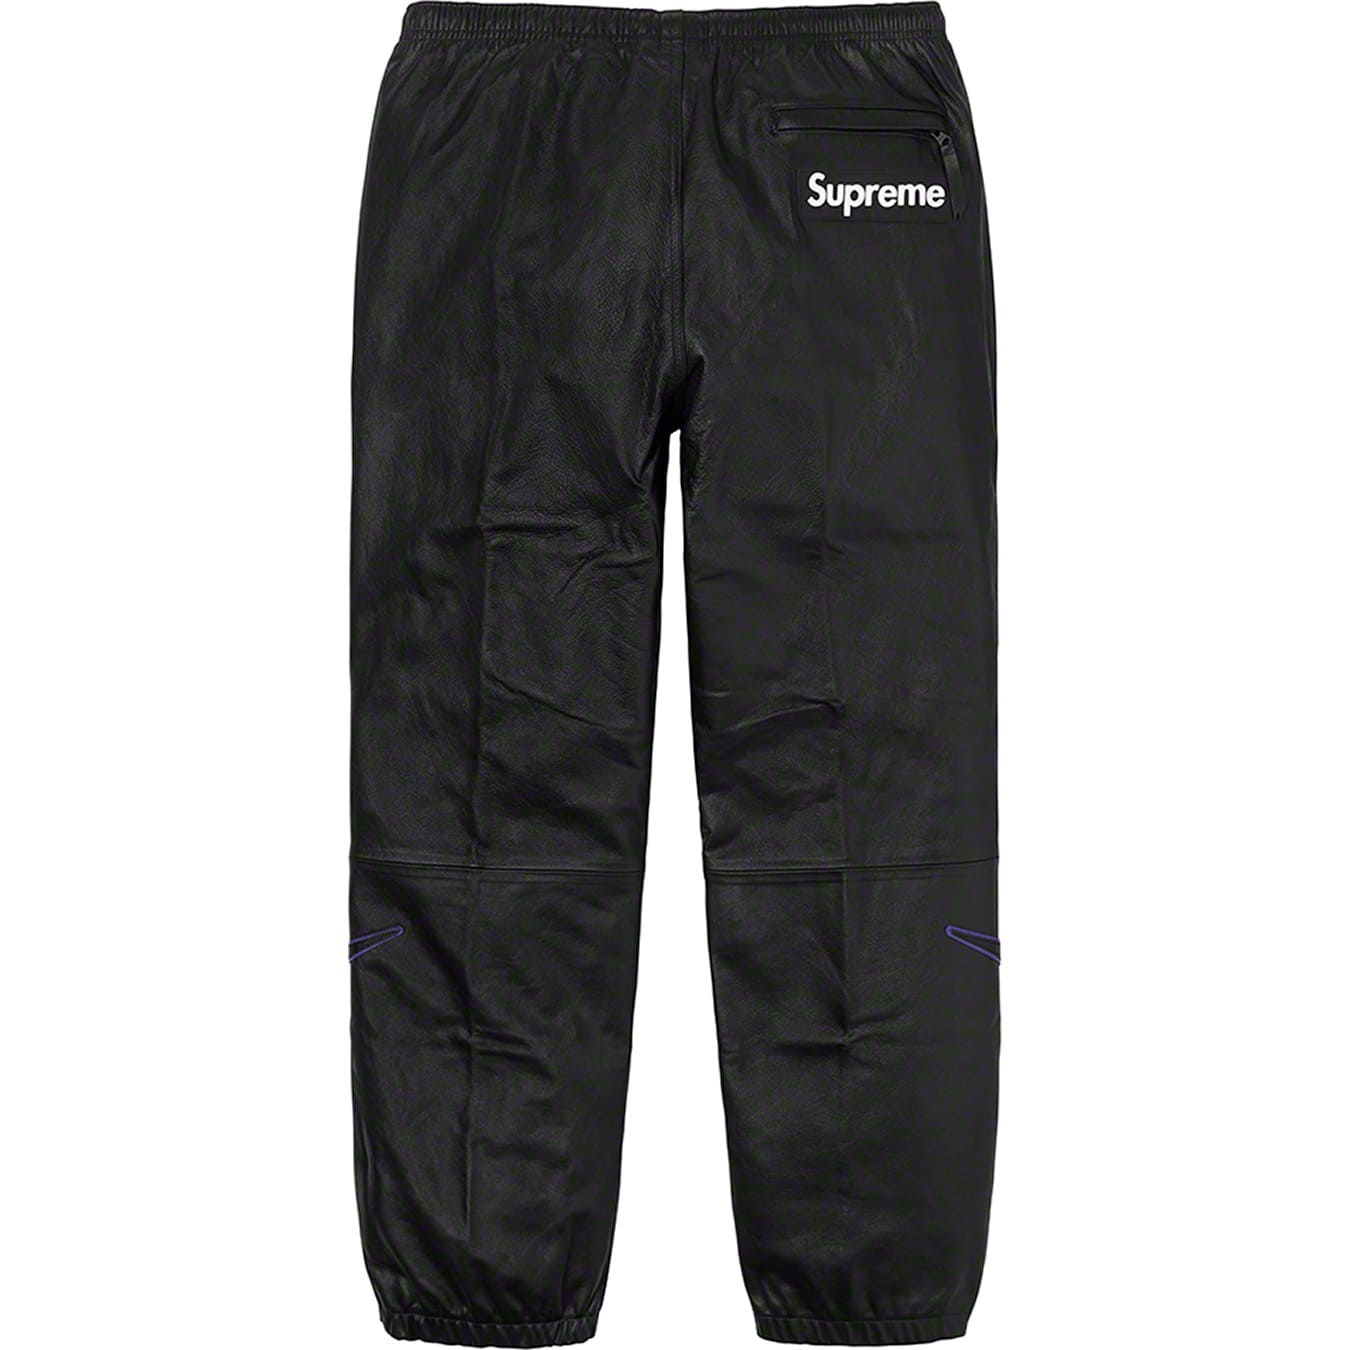 Supreme®/Nike® Leather Warm Up Pant | Supreme 19fw